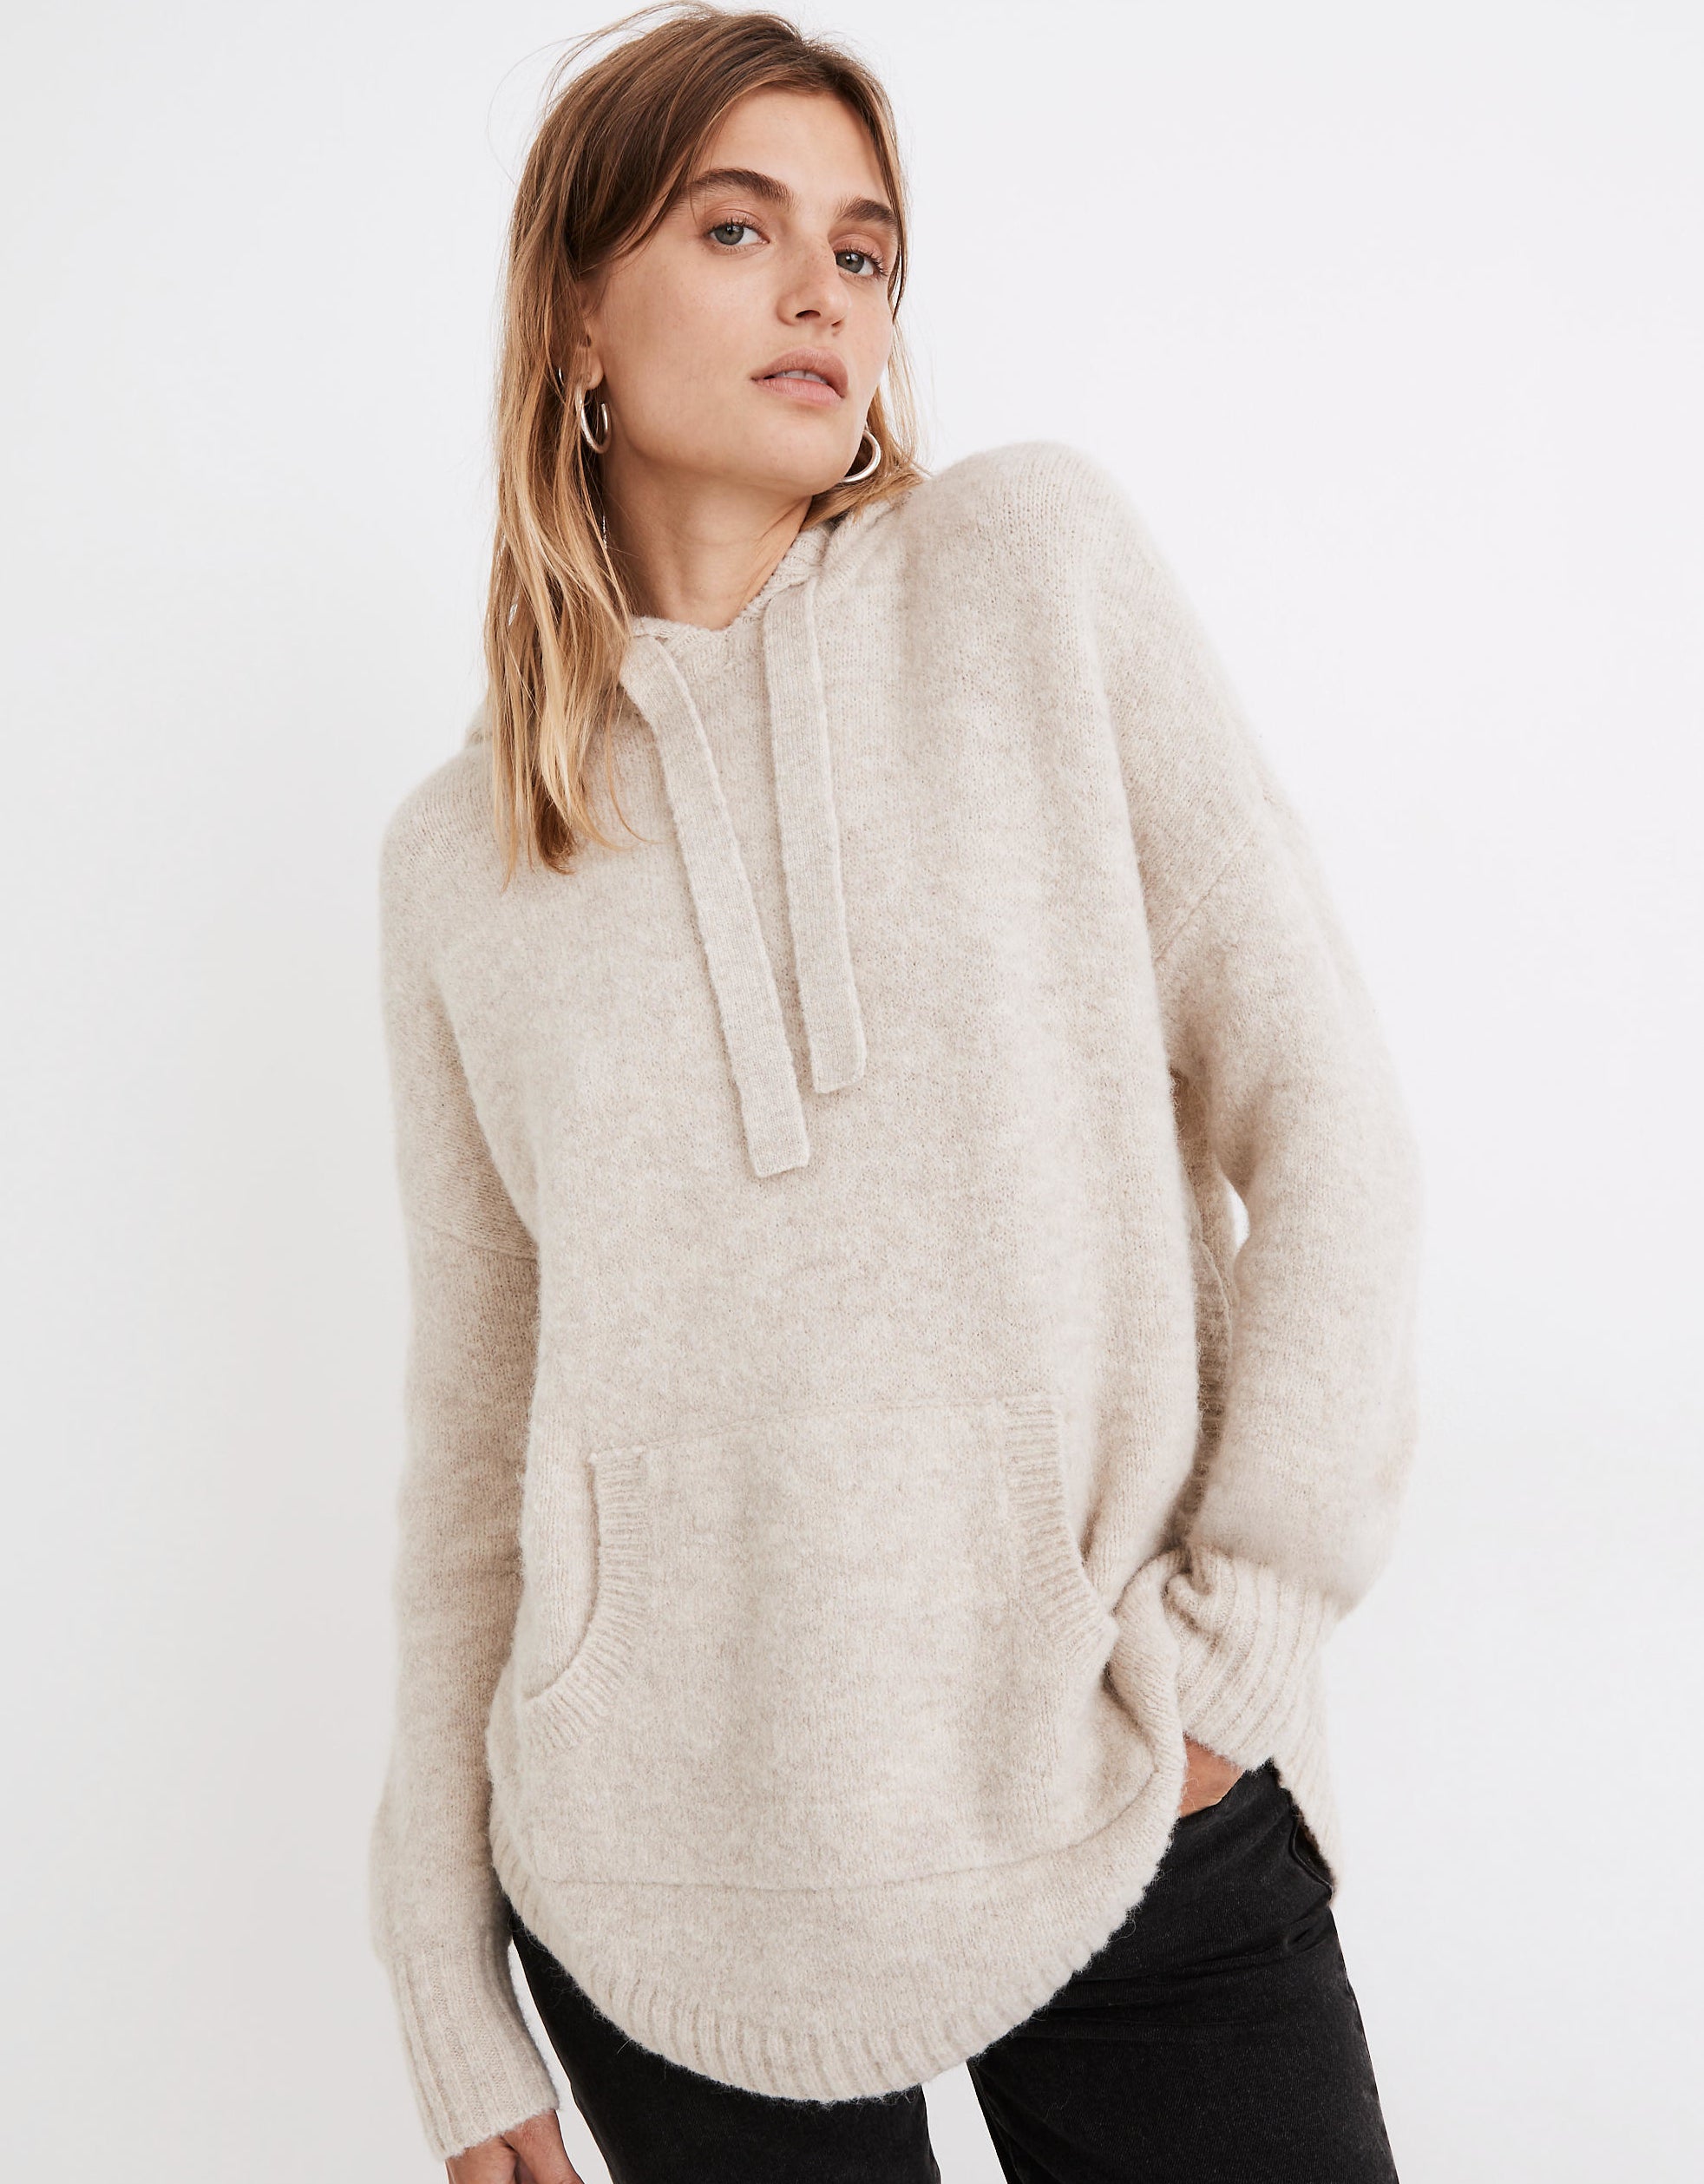 model wearing the cream hoodie sweater